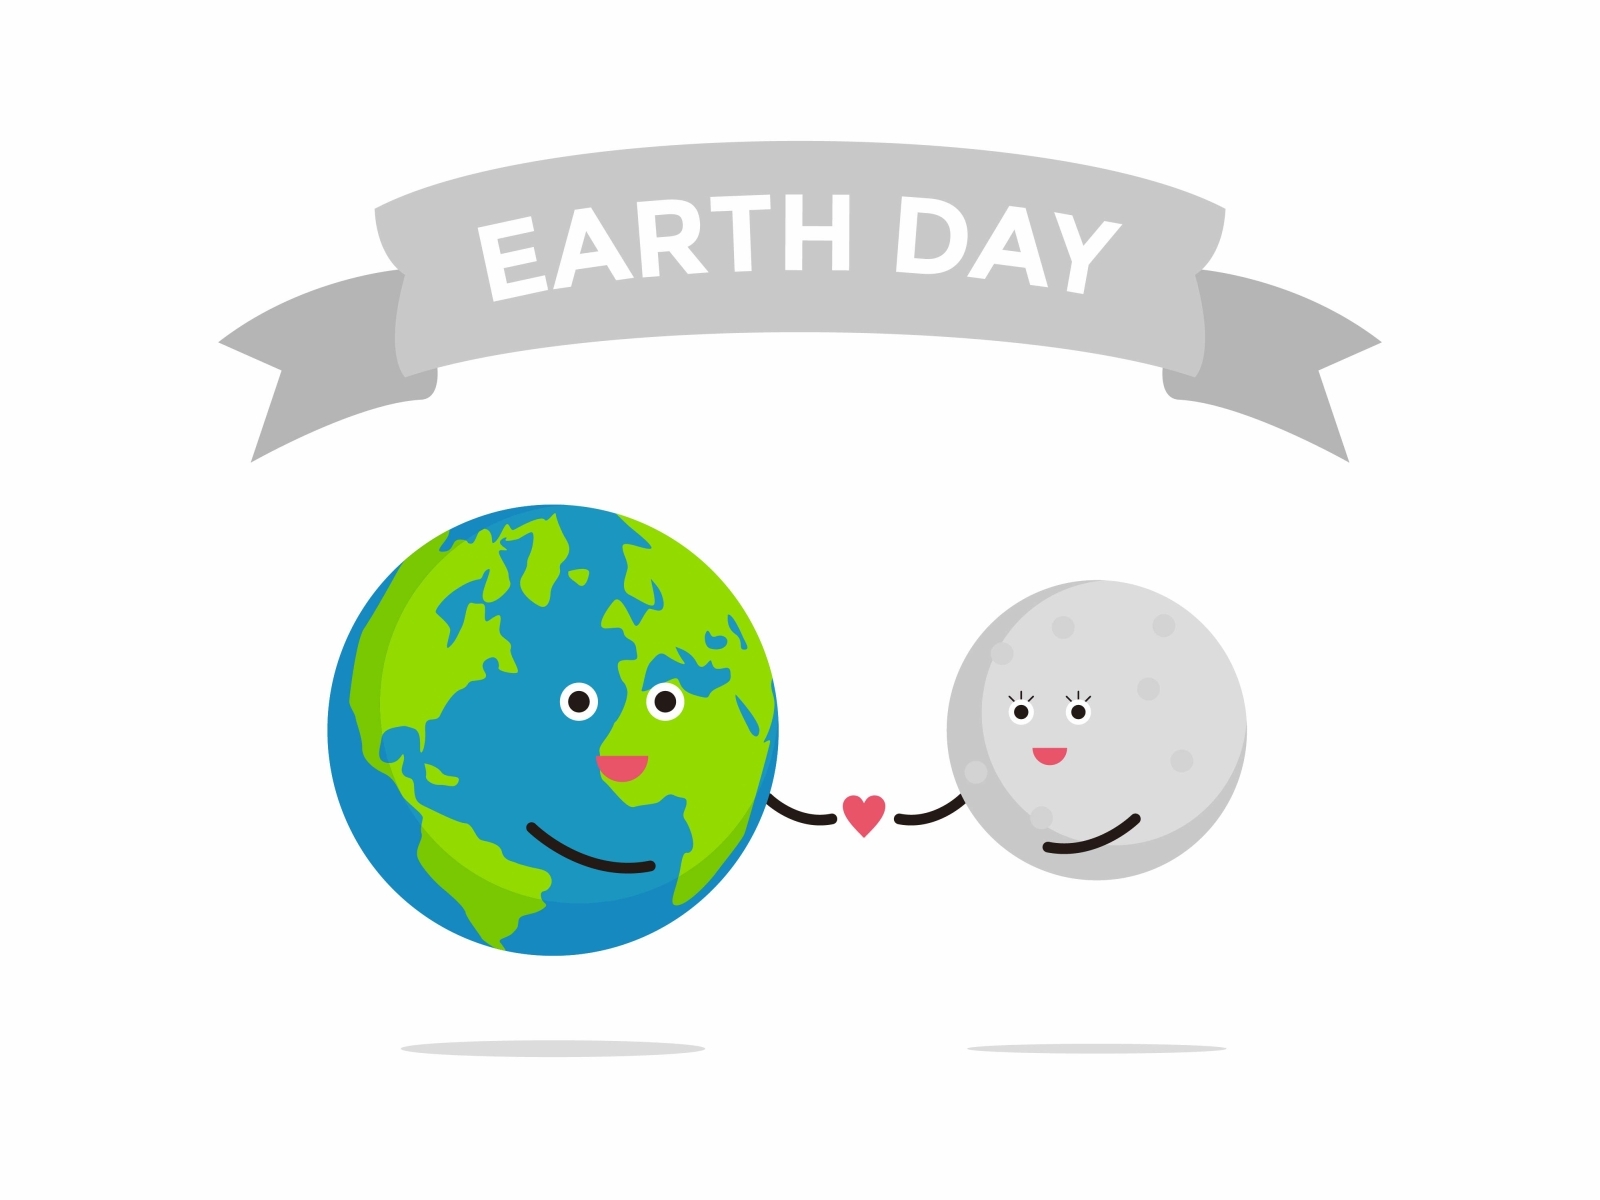 Fun Earth Day Cartoon vector by VEEZA DESIGN on Dribbble